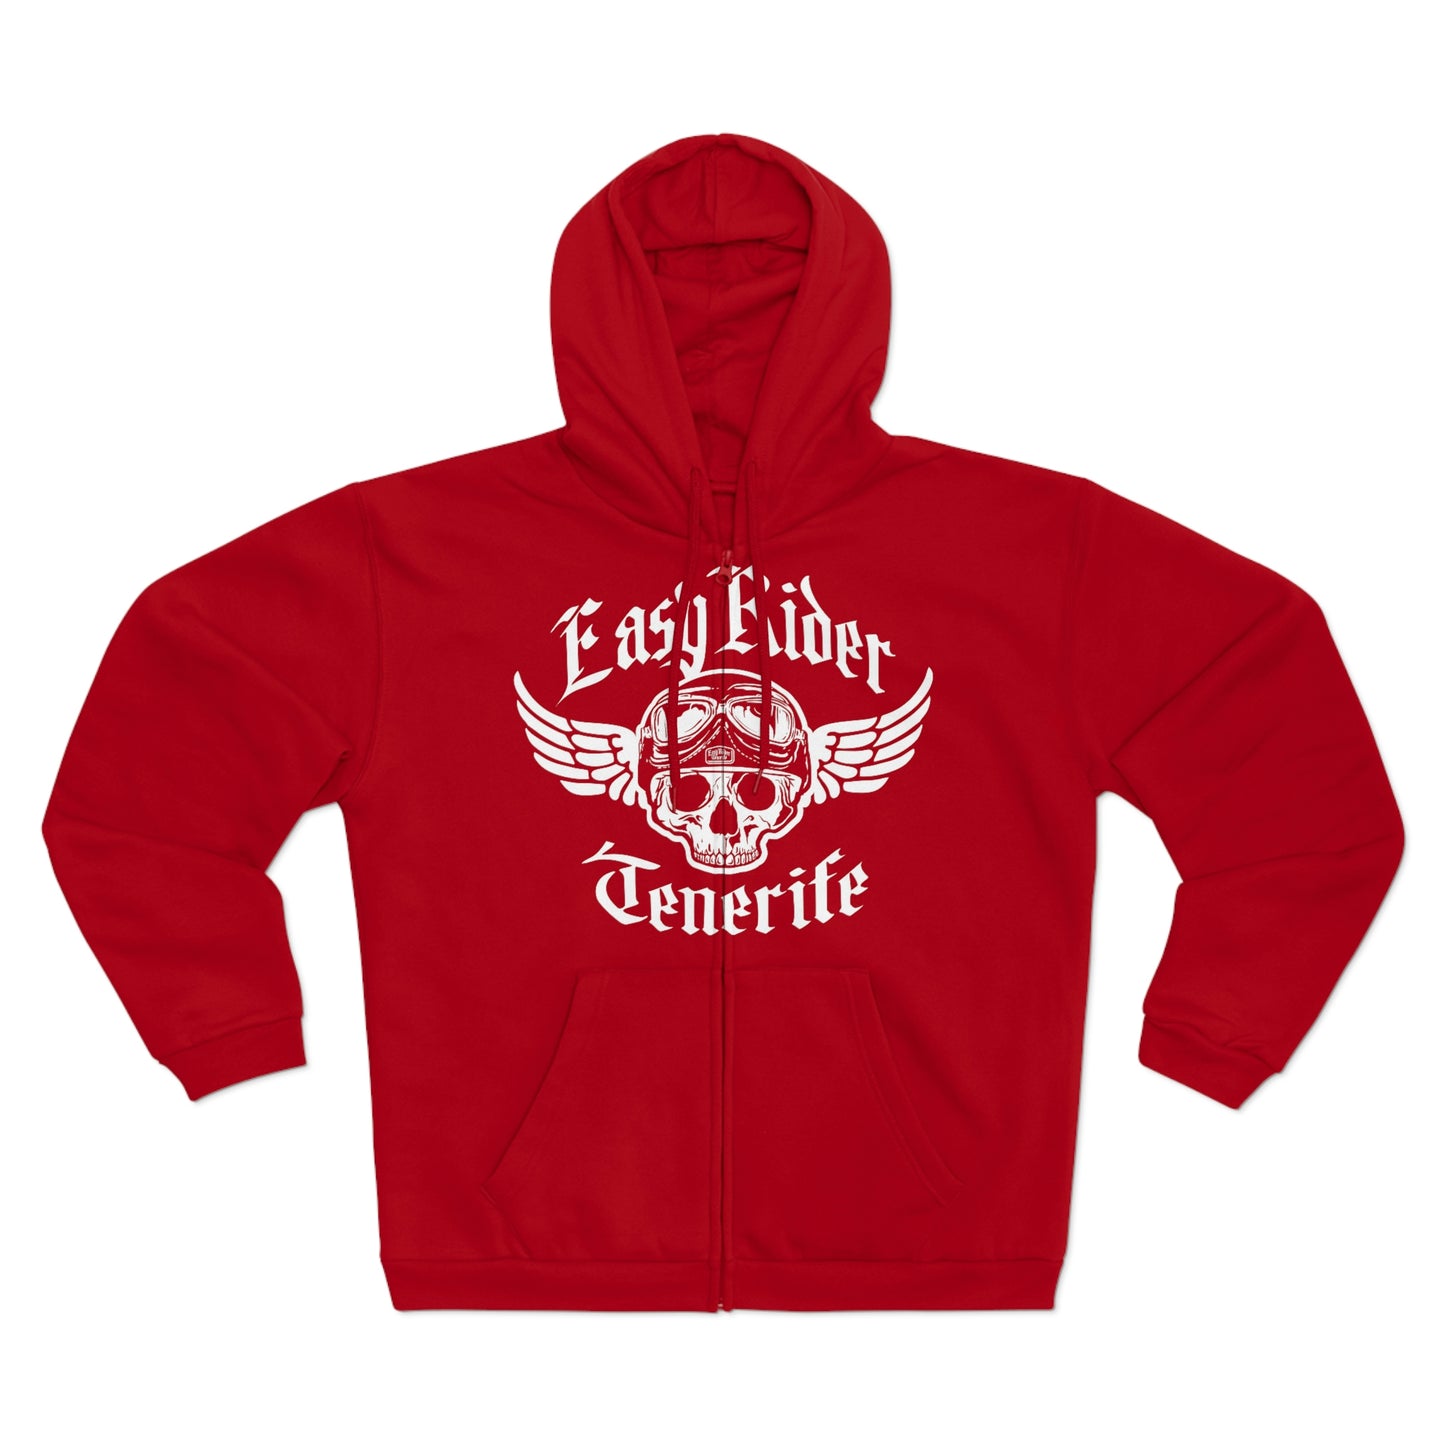 Easy Rider Tenerife - Unisex Hooded Zip Sweatshirt